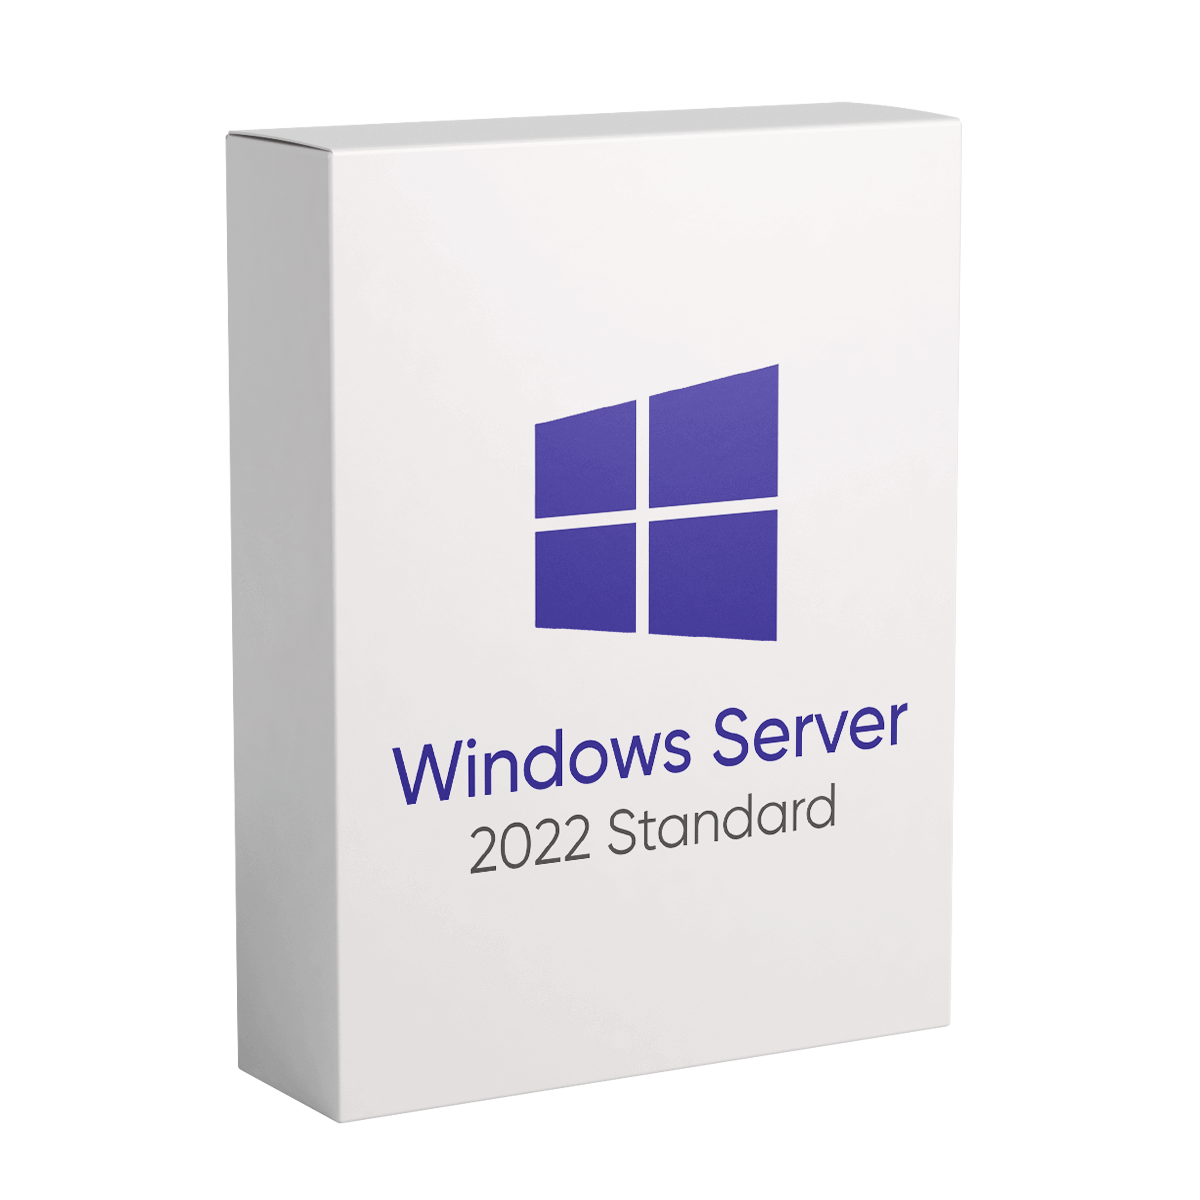 Windows Server 2022 Standard - Lifetime License for 1 PC